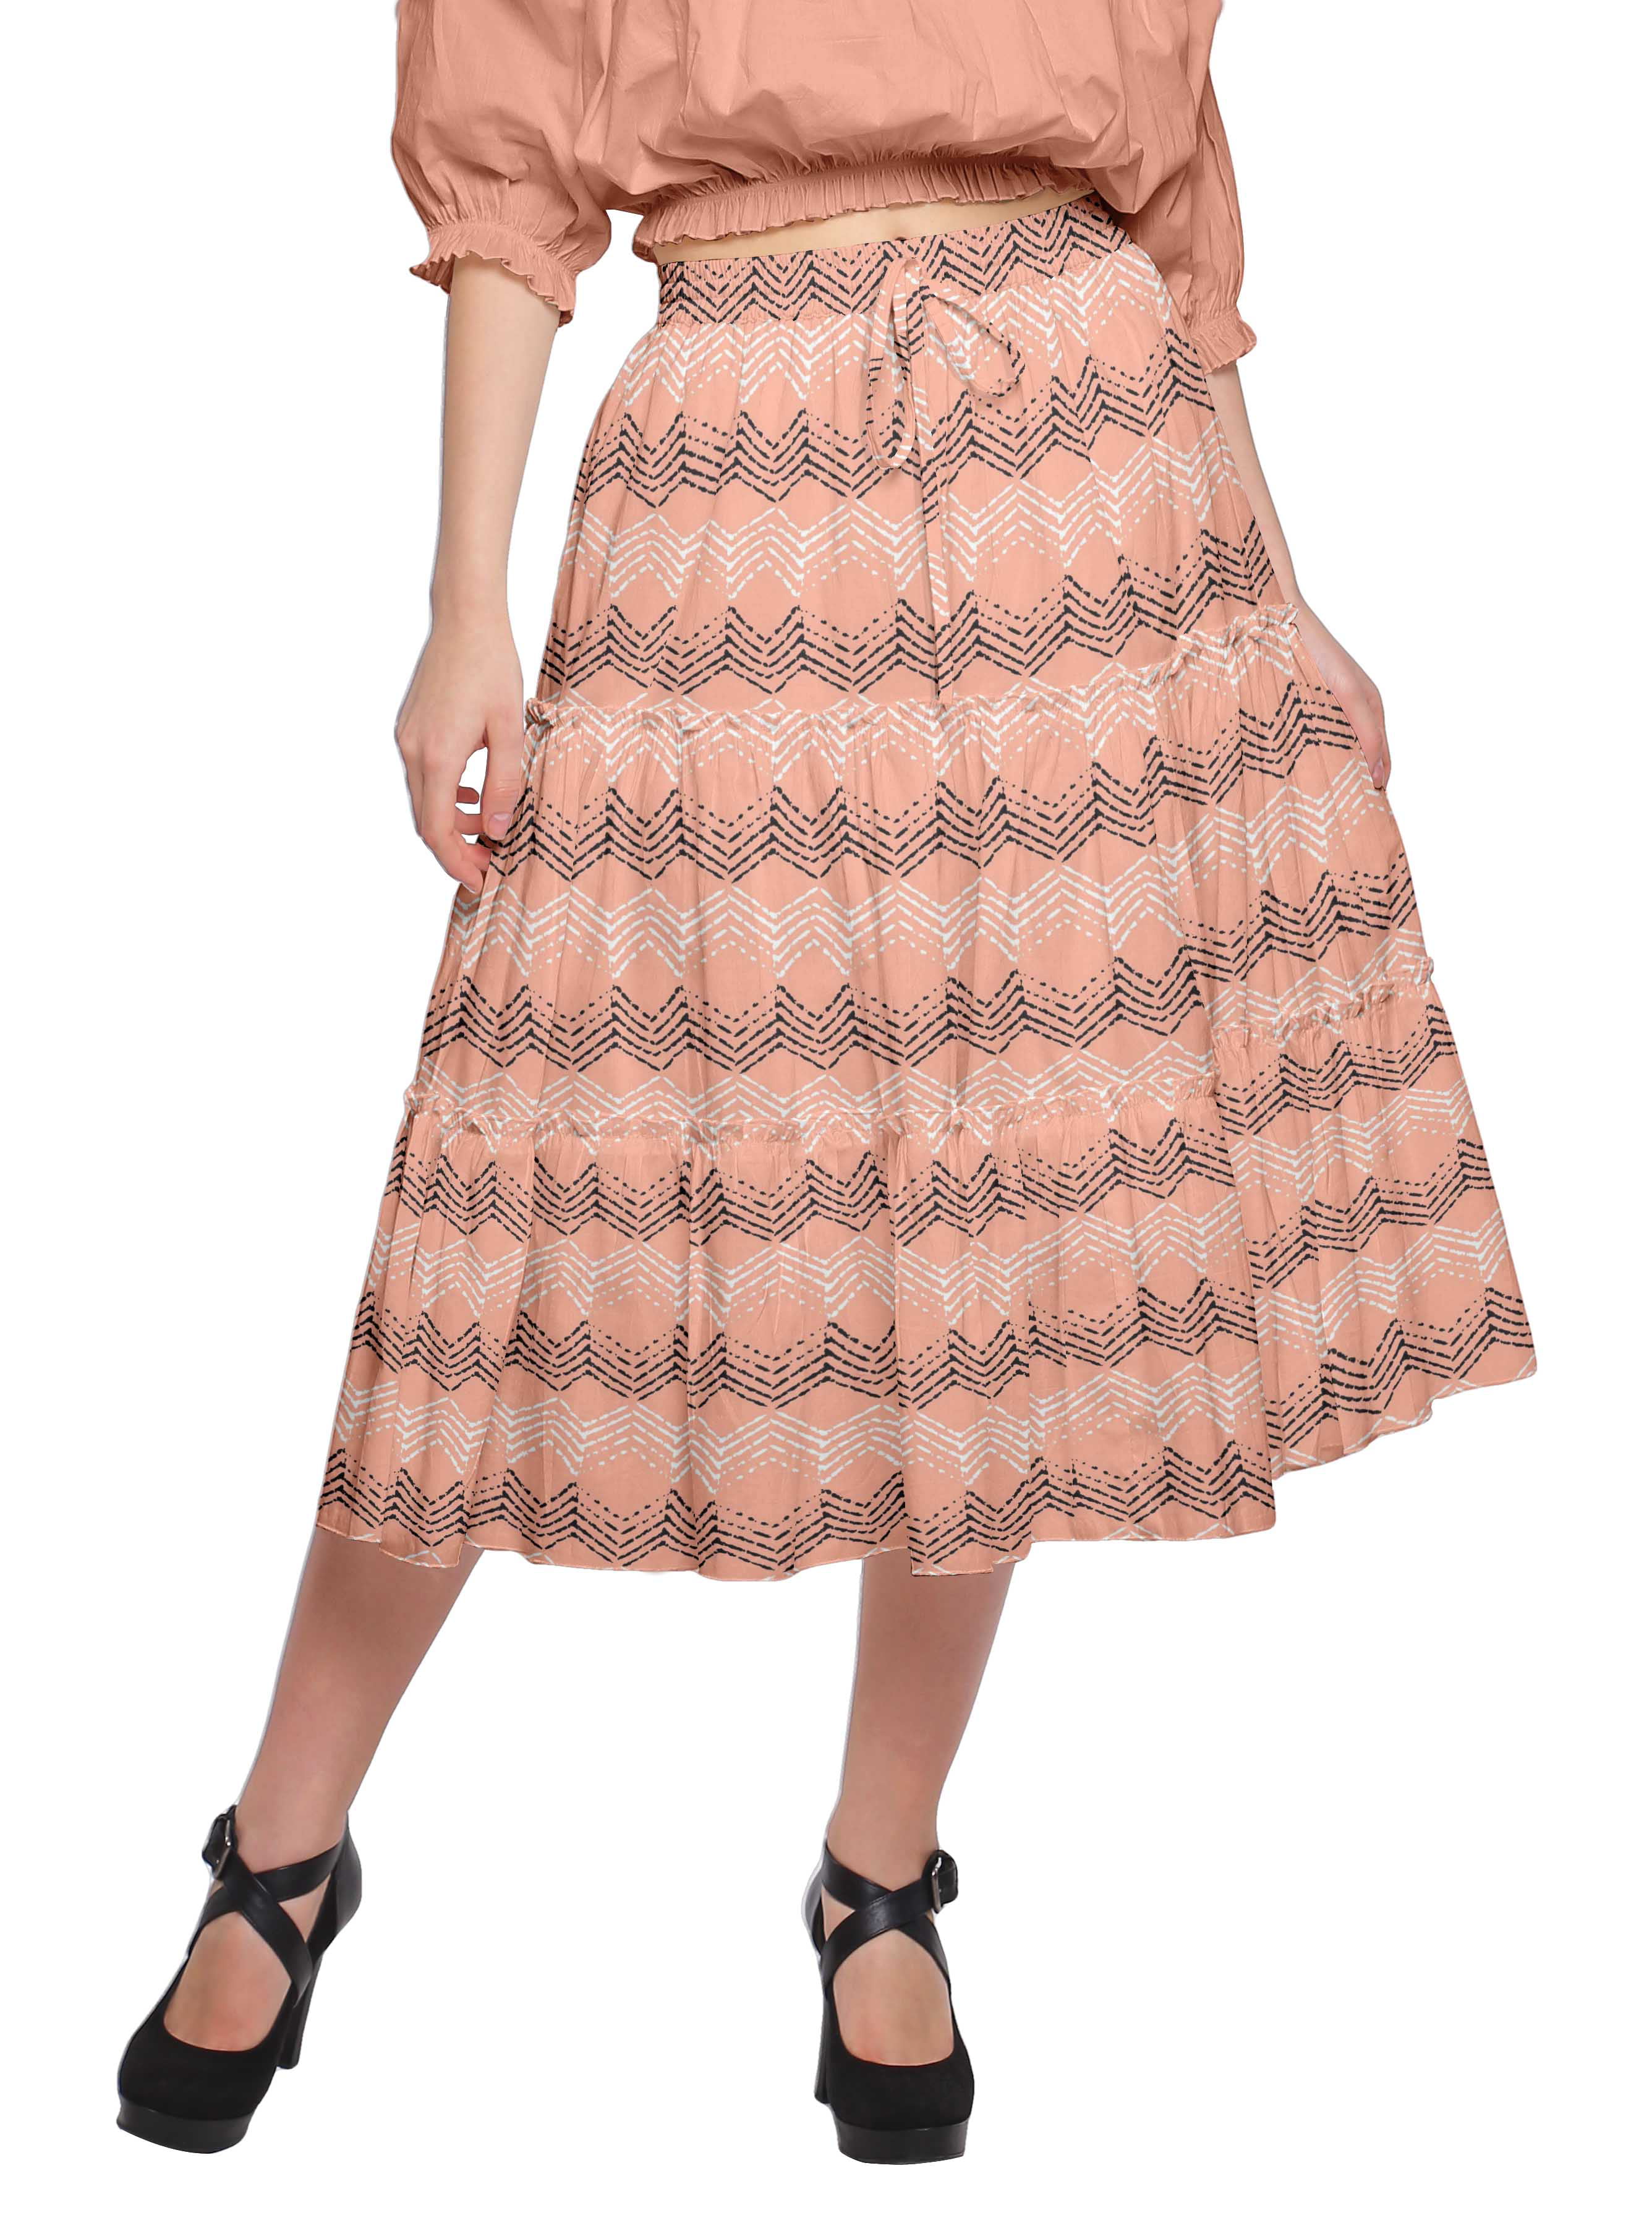 Moomaya Flared Skirts For Women Below Knee Length Casual Wear Summer  Clothing - Walmart.com